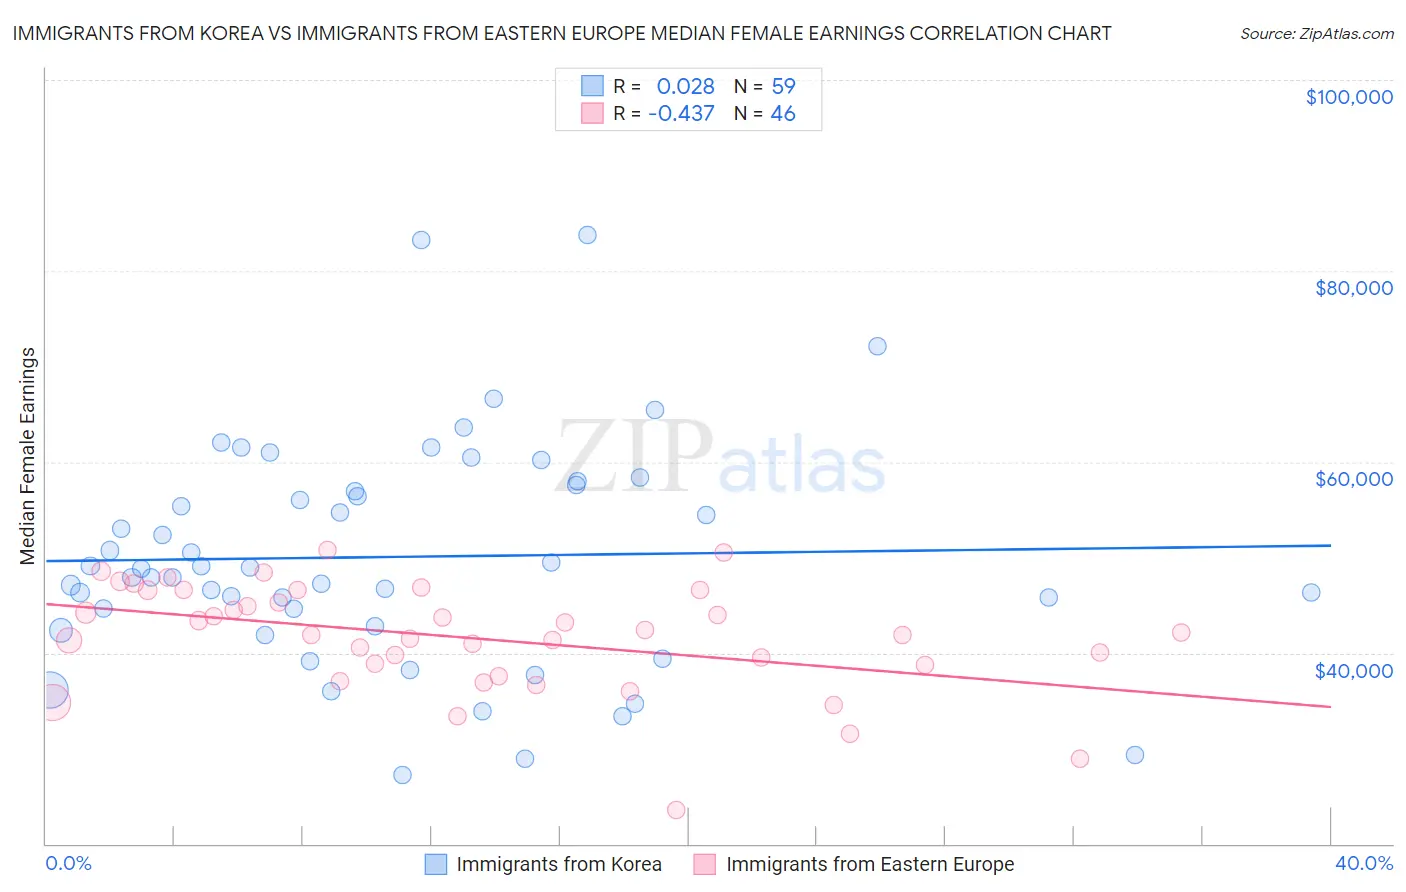 Immigrants from Korea vs Immigrants from Eastern Europe Median Female Earnings